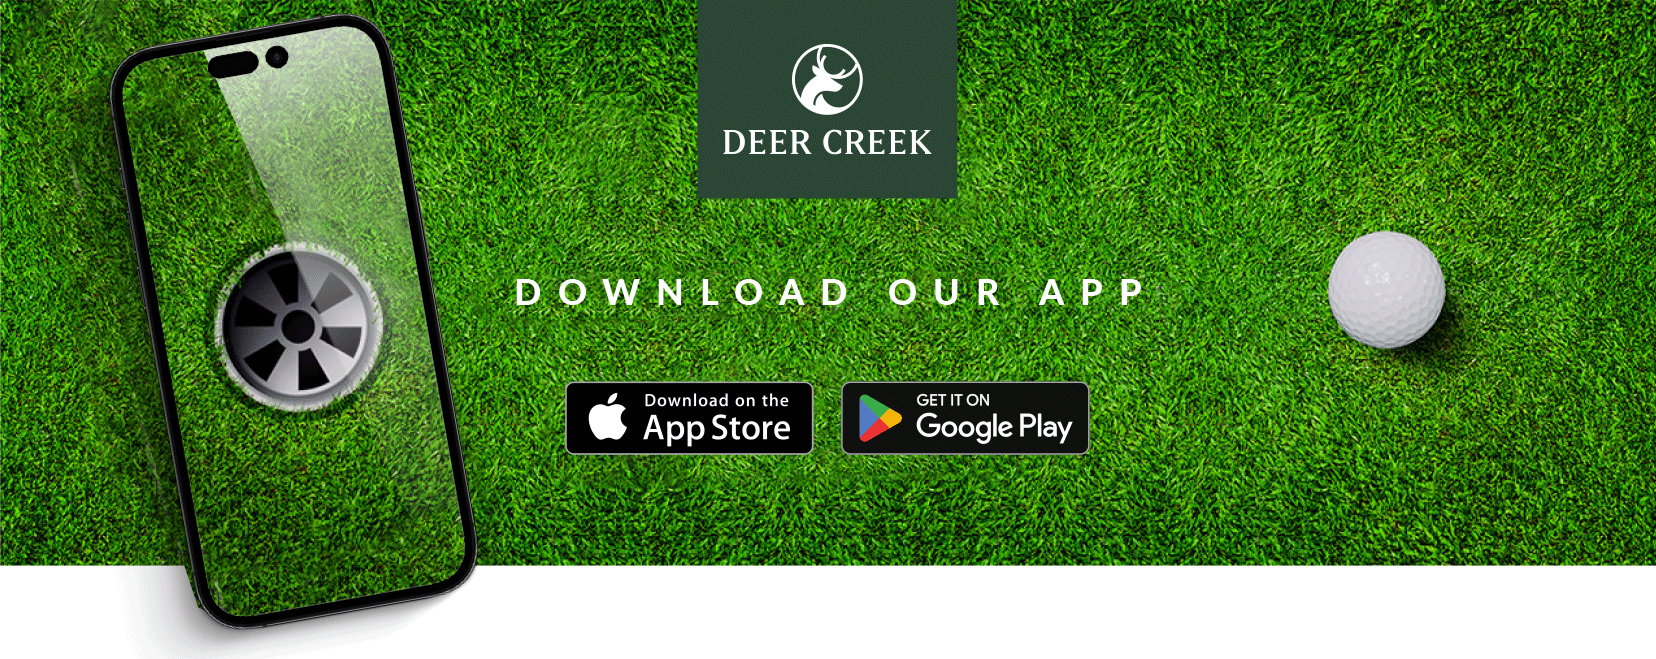 Deer Creek App